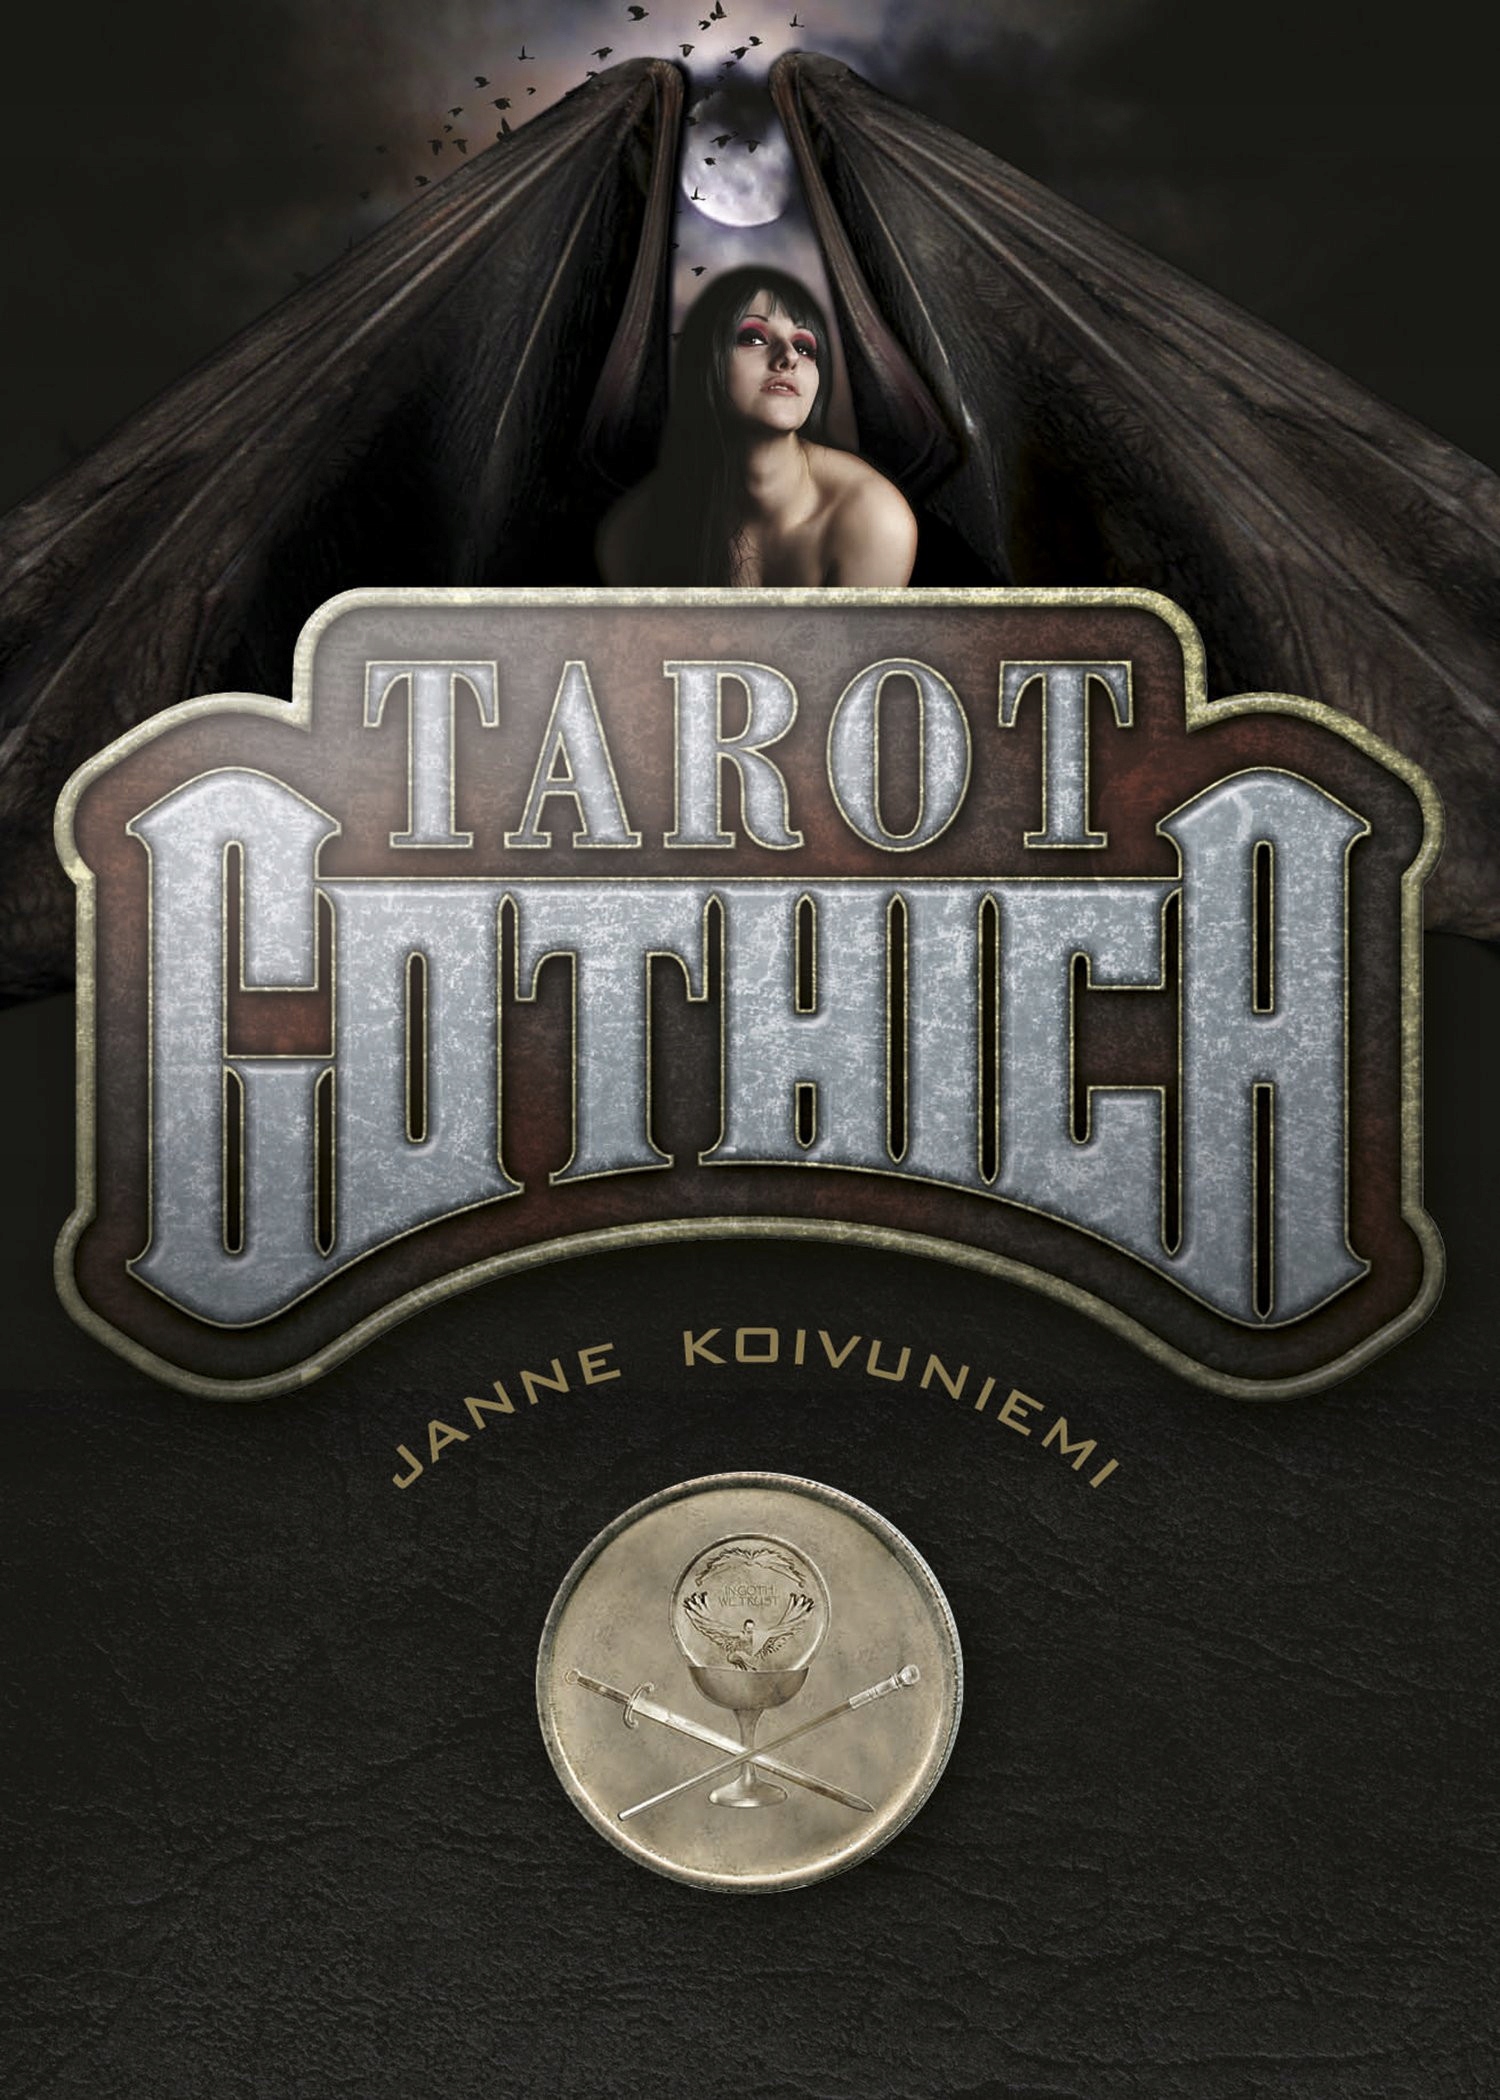 TAROT GOTHICA - karty tarota